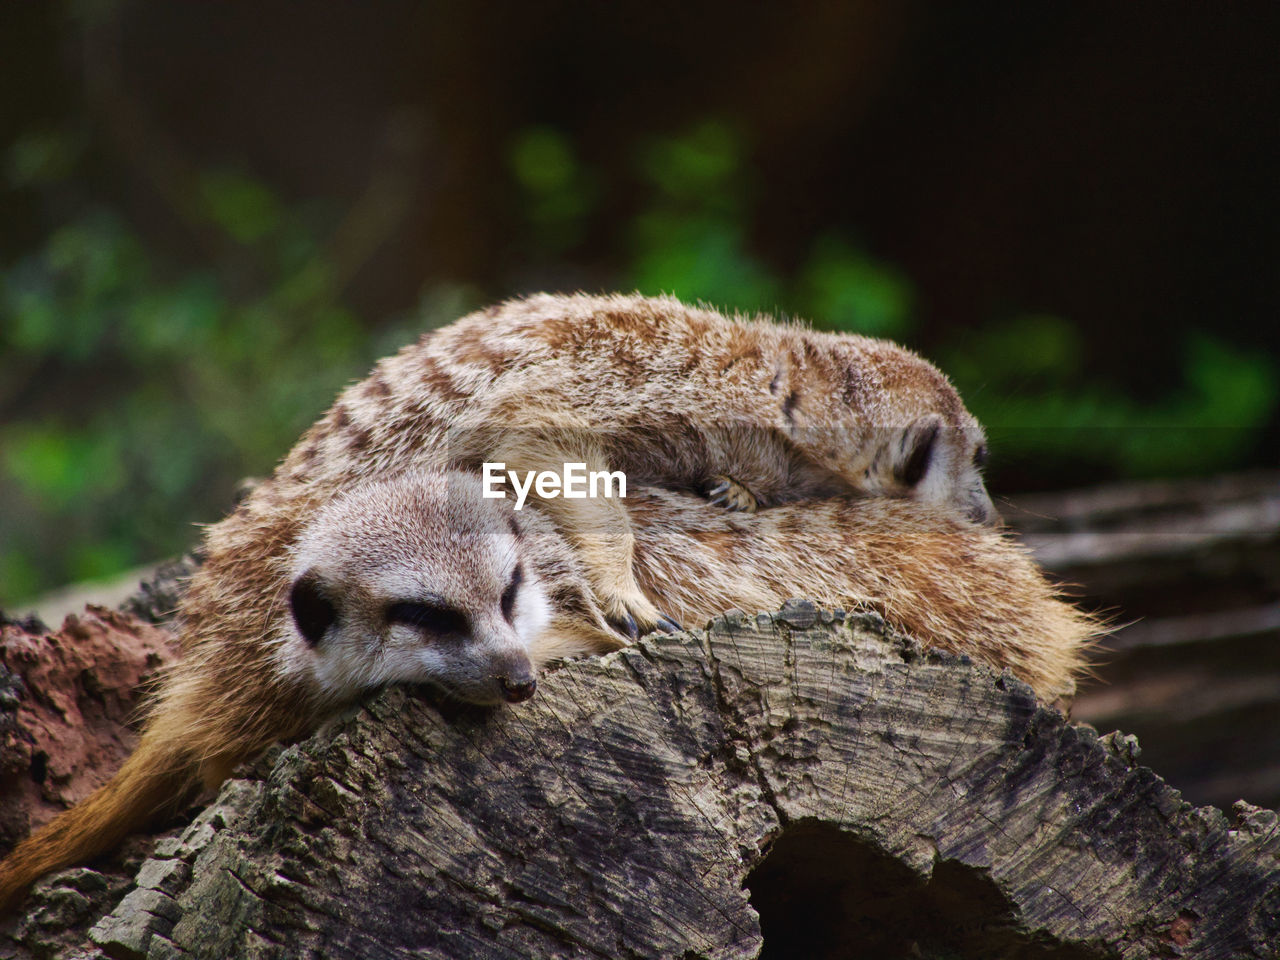 Close-up of meerkats on wood sleeping